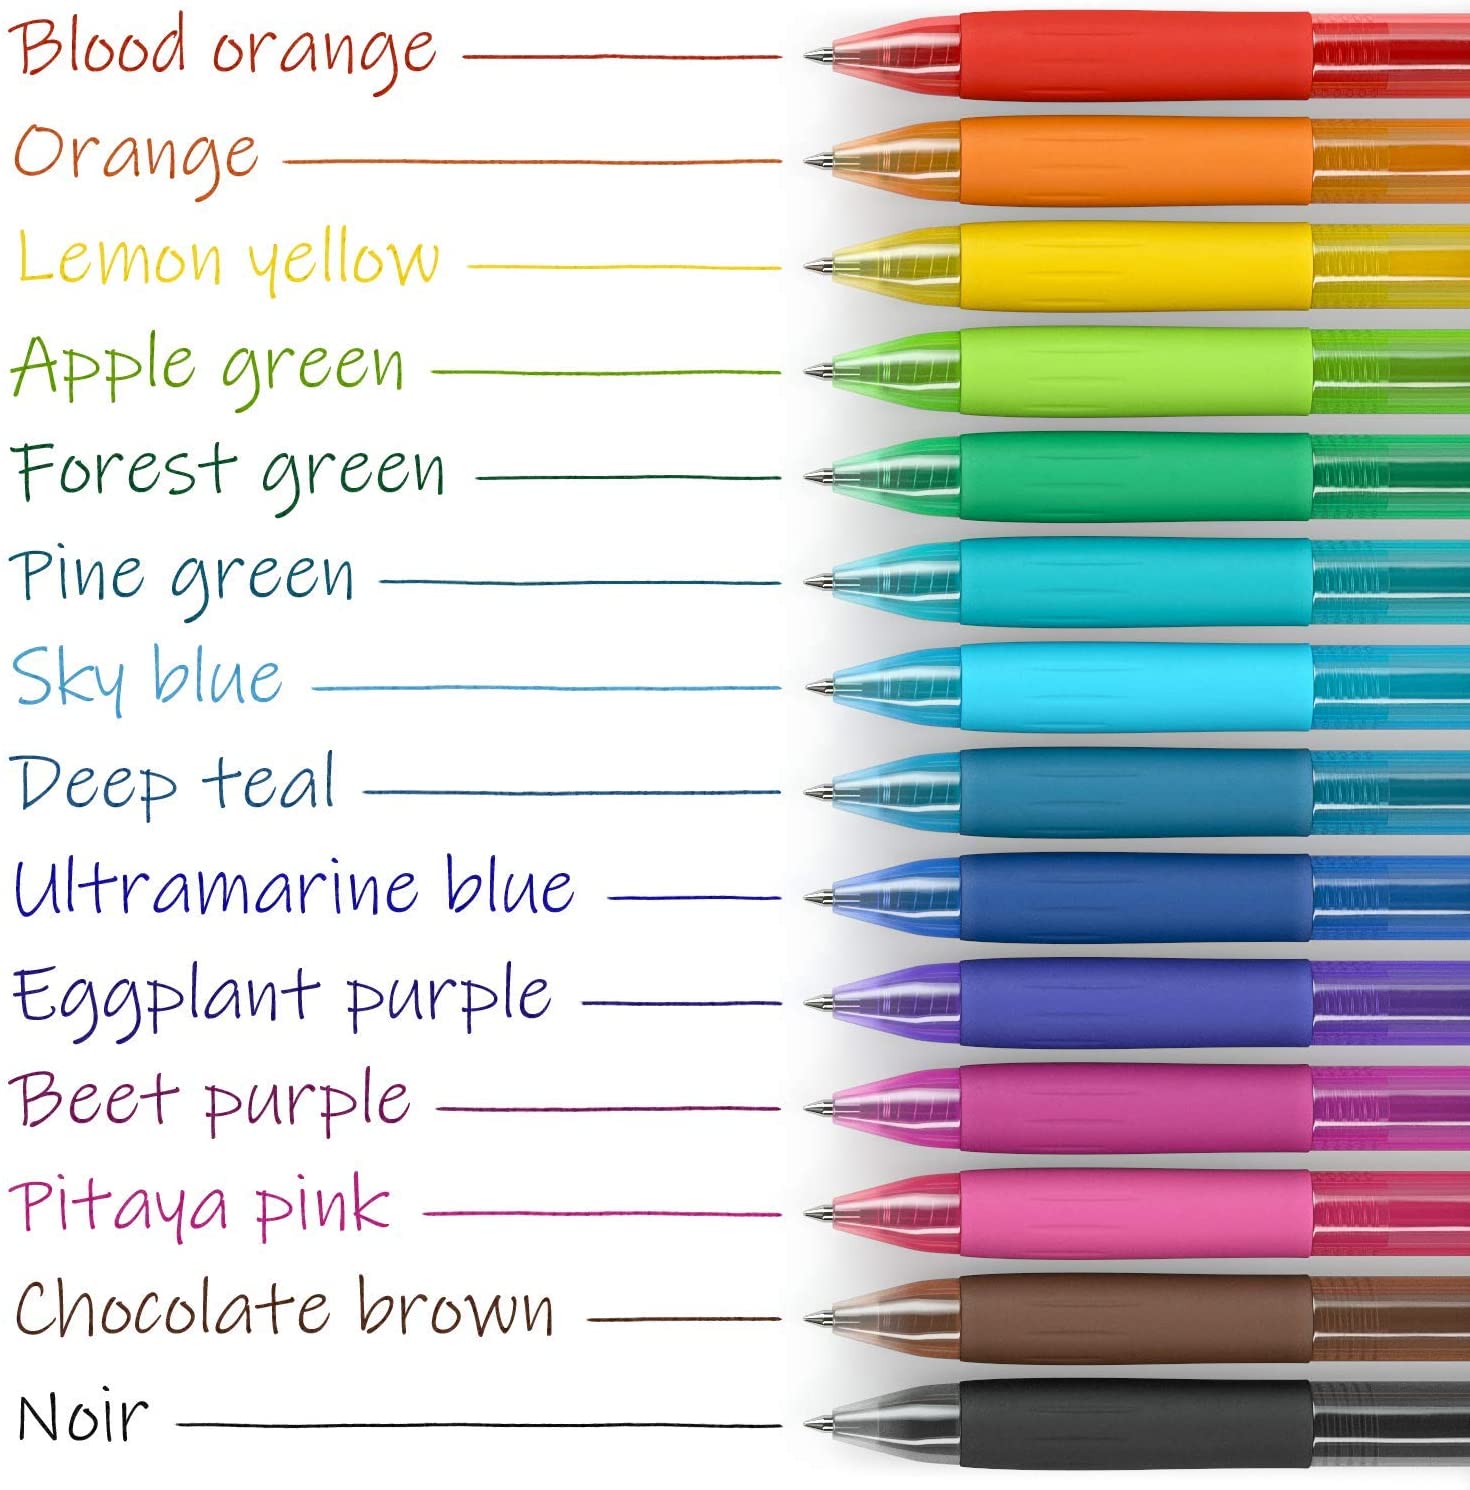 Color Gel Pens in Pens 